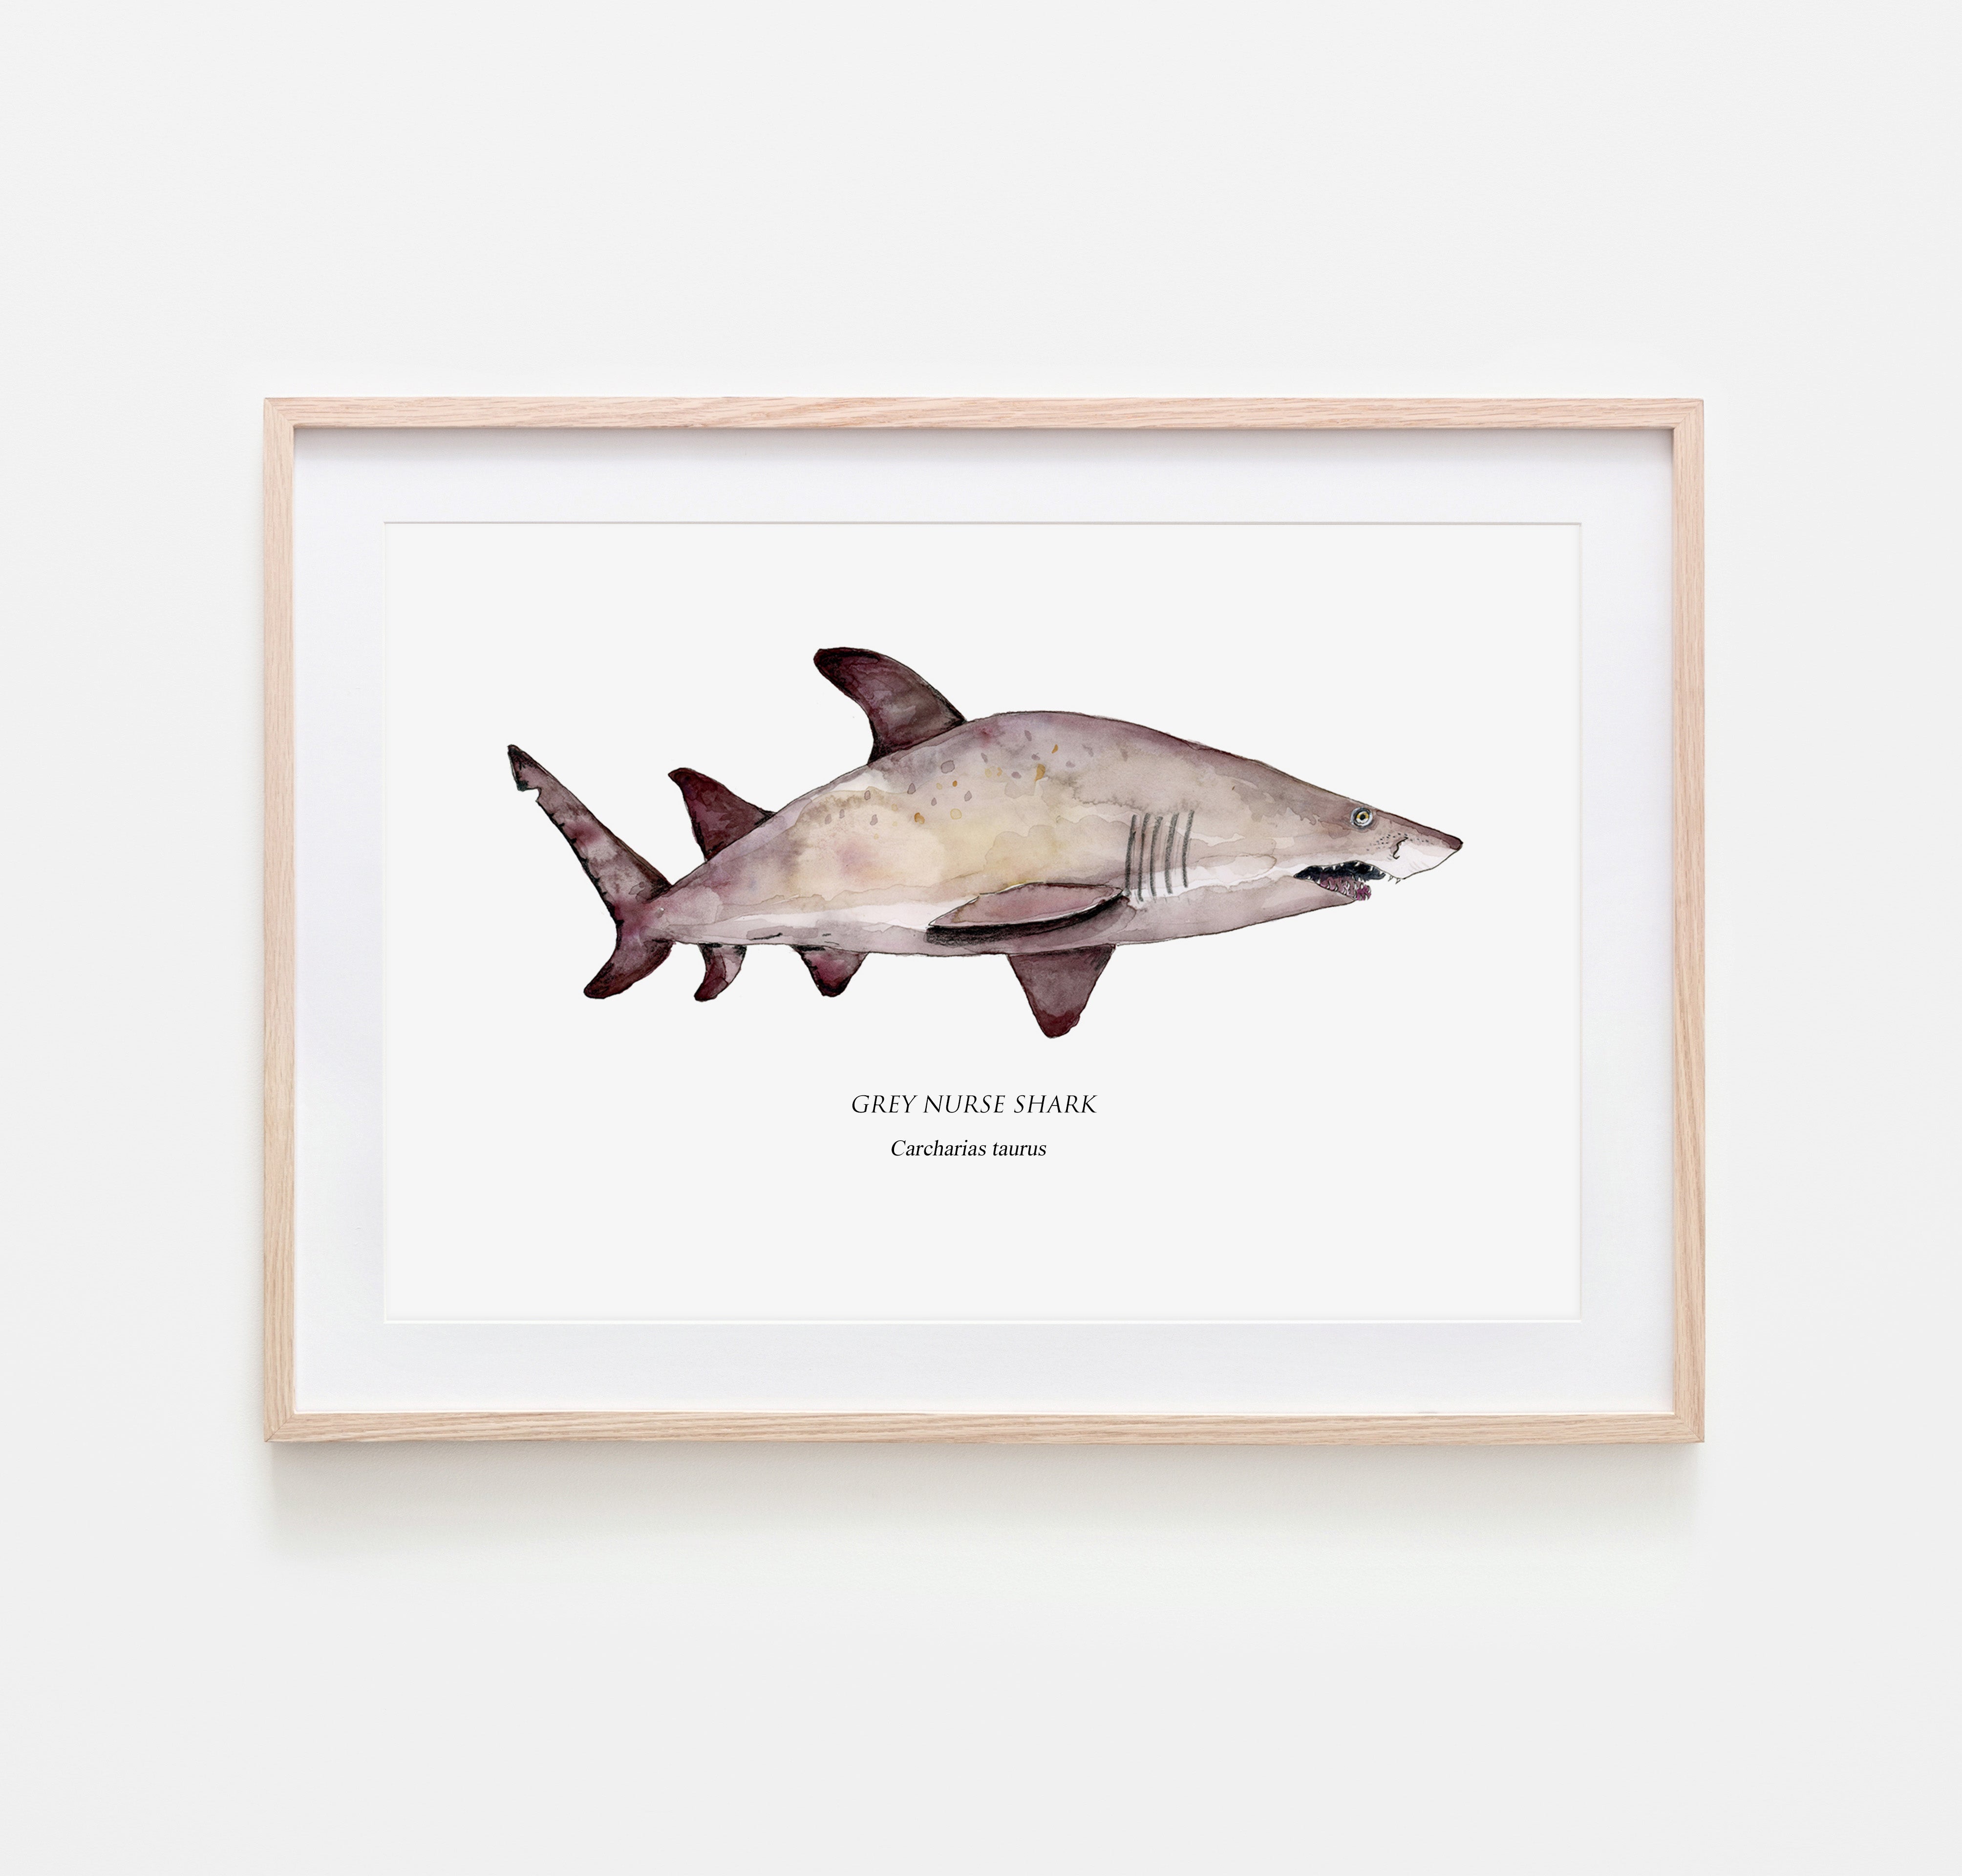 Grey nurse shark print